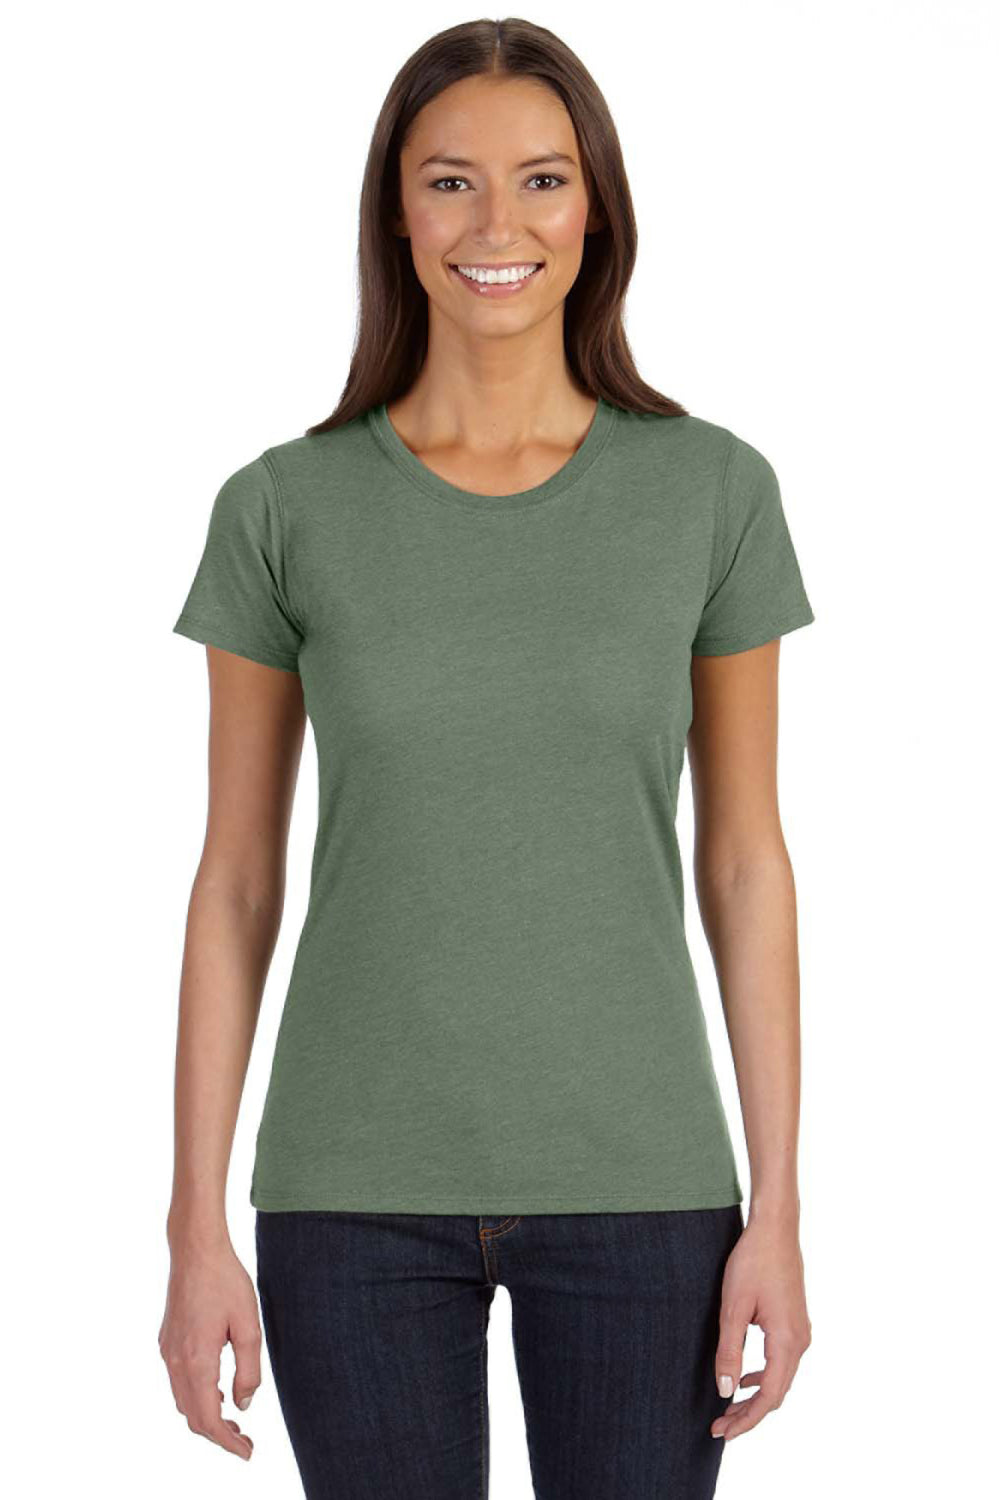 Econscious EC3800 Womens Short Sleeve Crewneck T-Shirt Asparagus Green Front